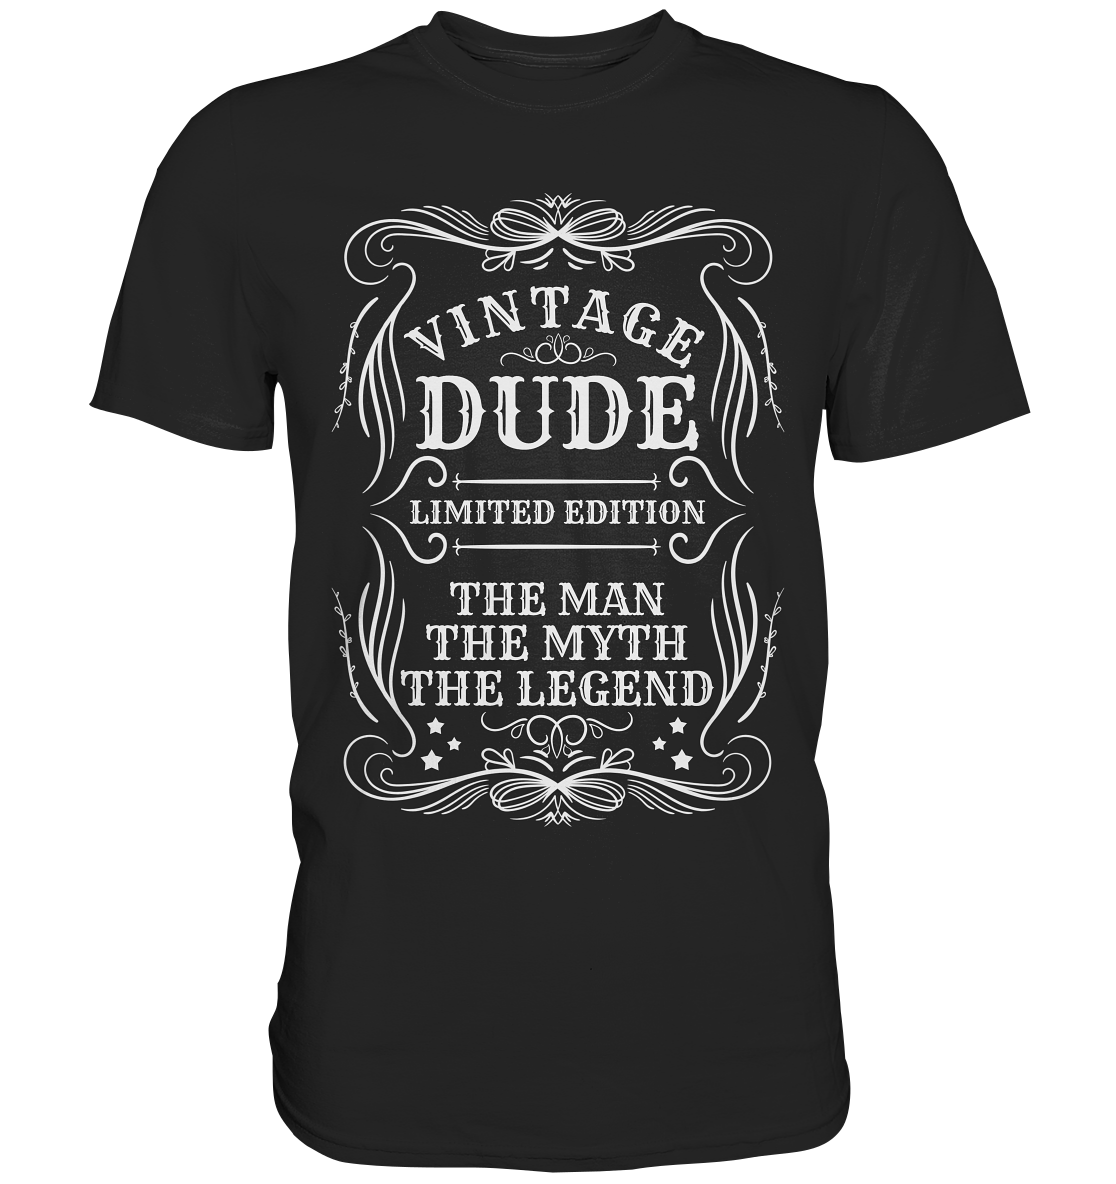 Vintage Dude. The Man. The Myth. The Legend. Retro - Premium Shirt